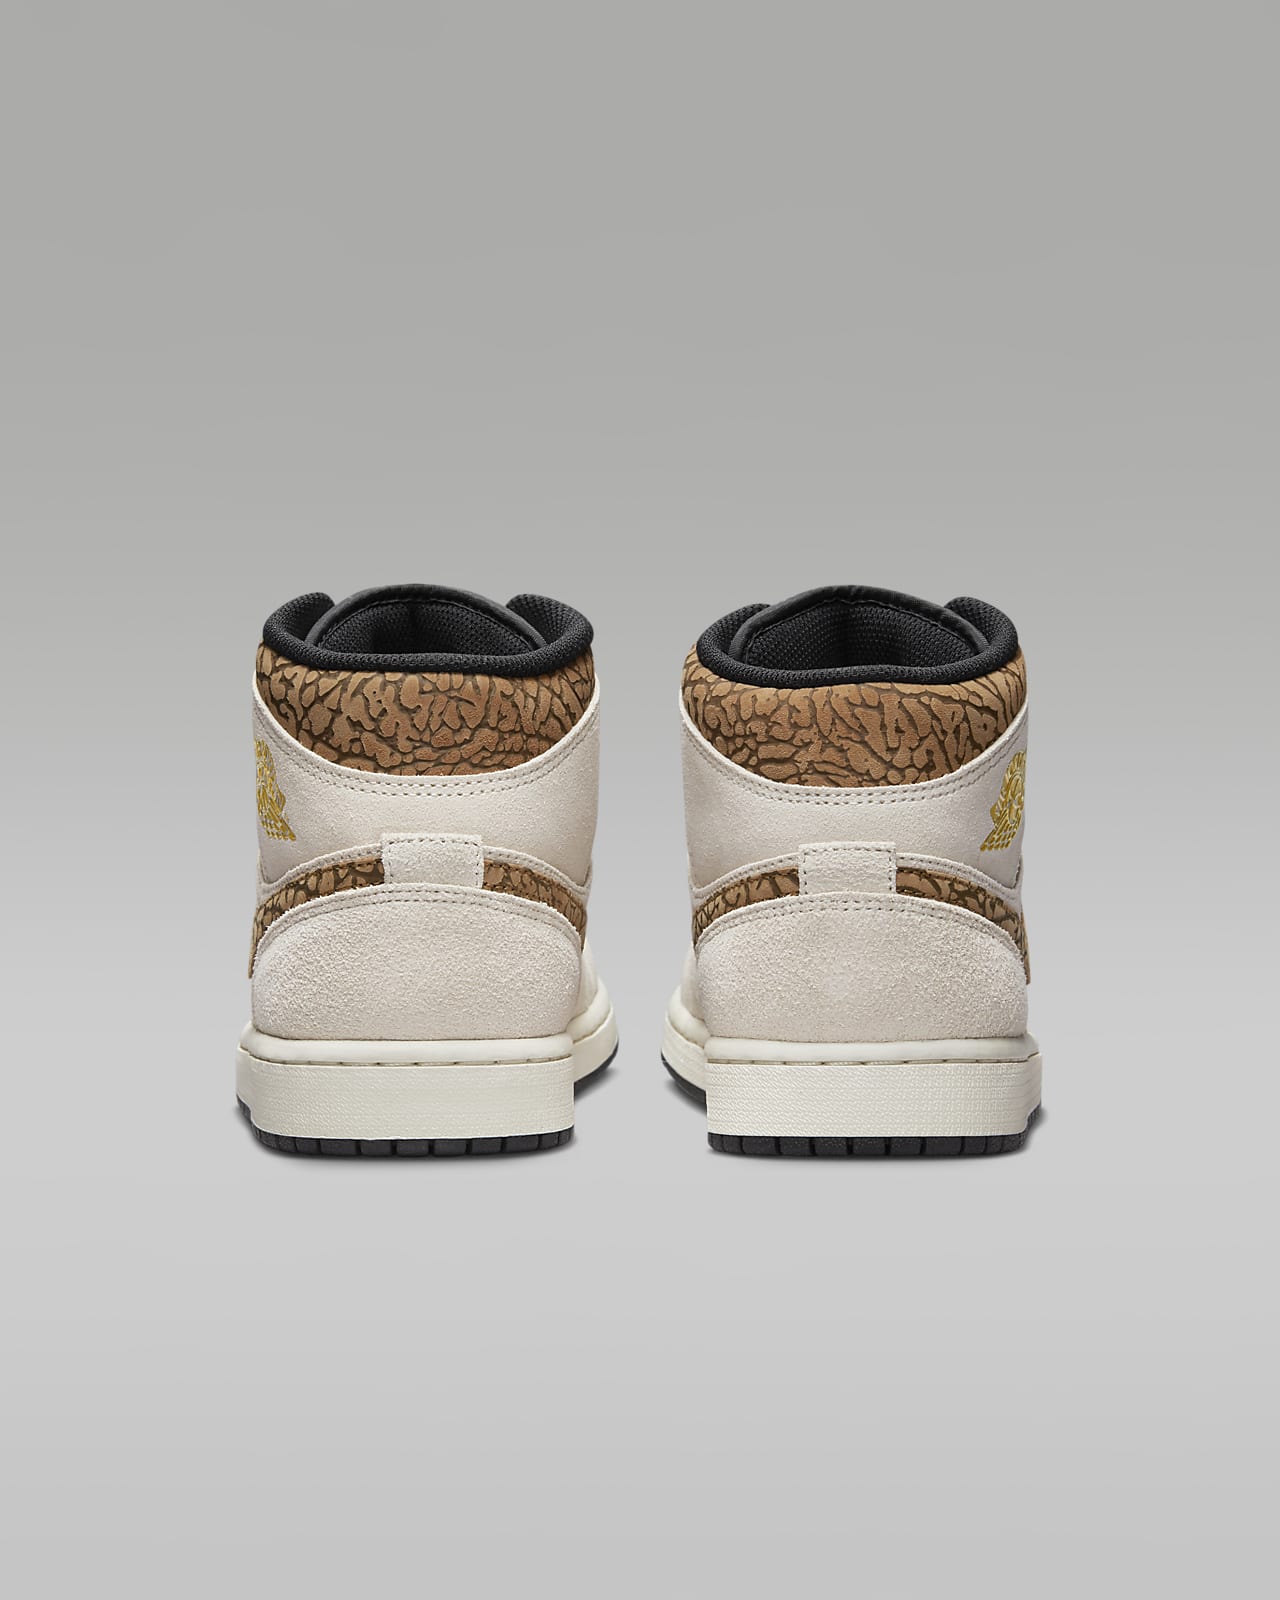 Air Jordan 1 Mid SE Men's Shoes, by Nike Size 8 (Brown)